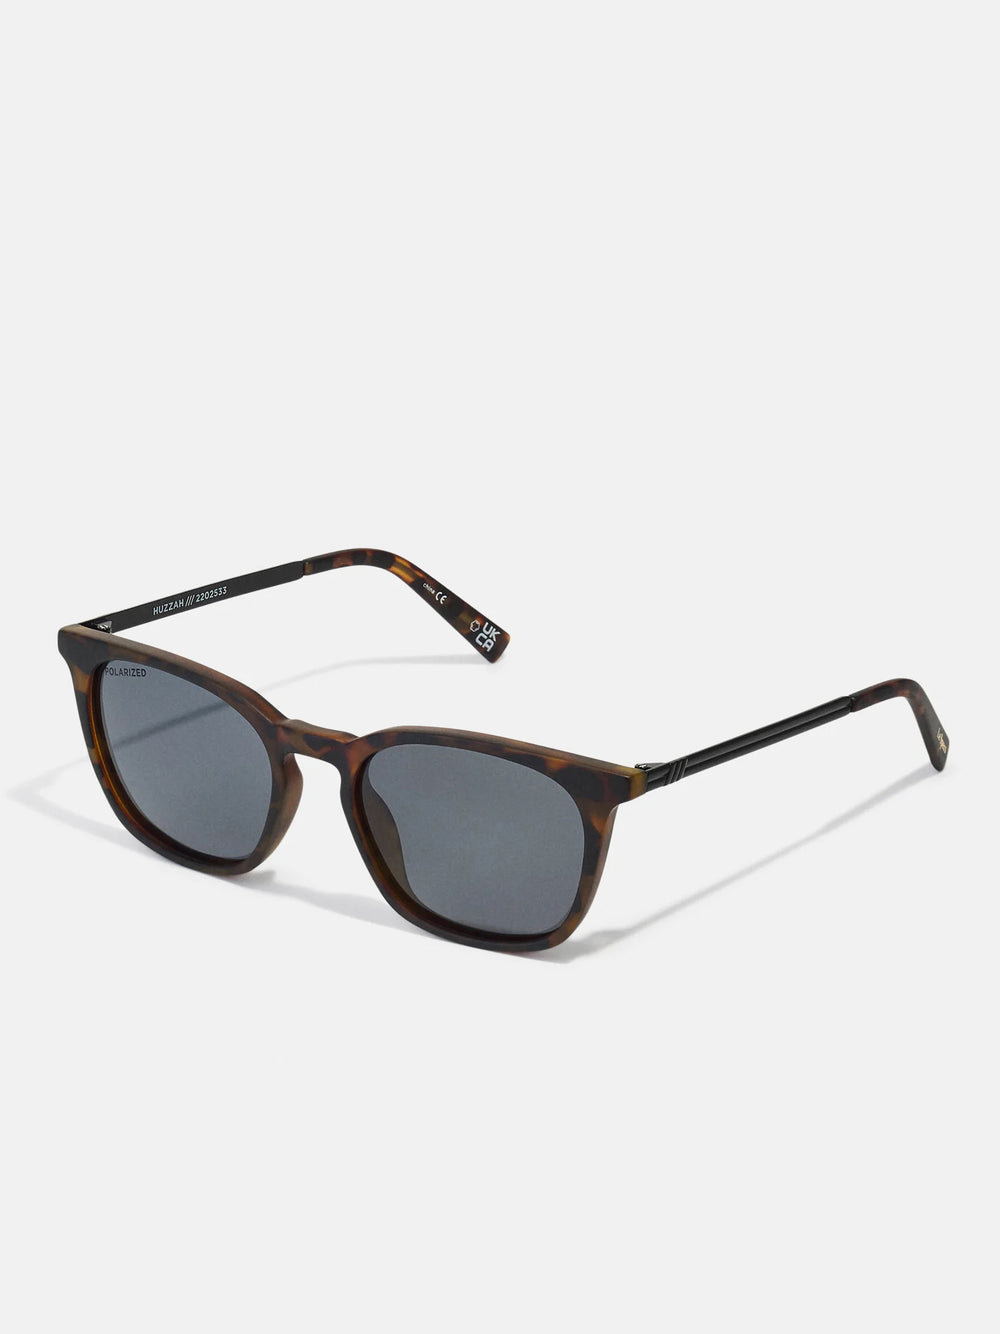 Le Specs / Huzzah / Sunglasses